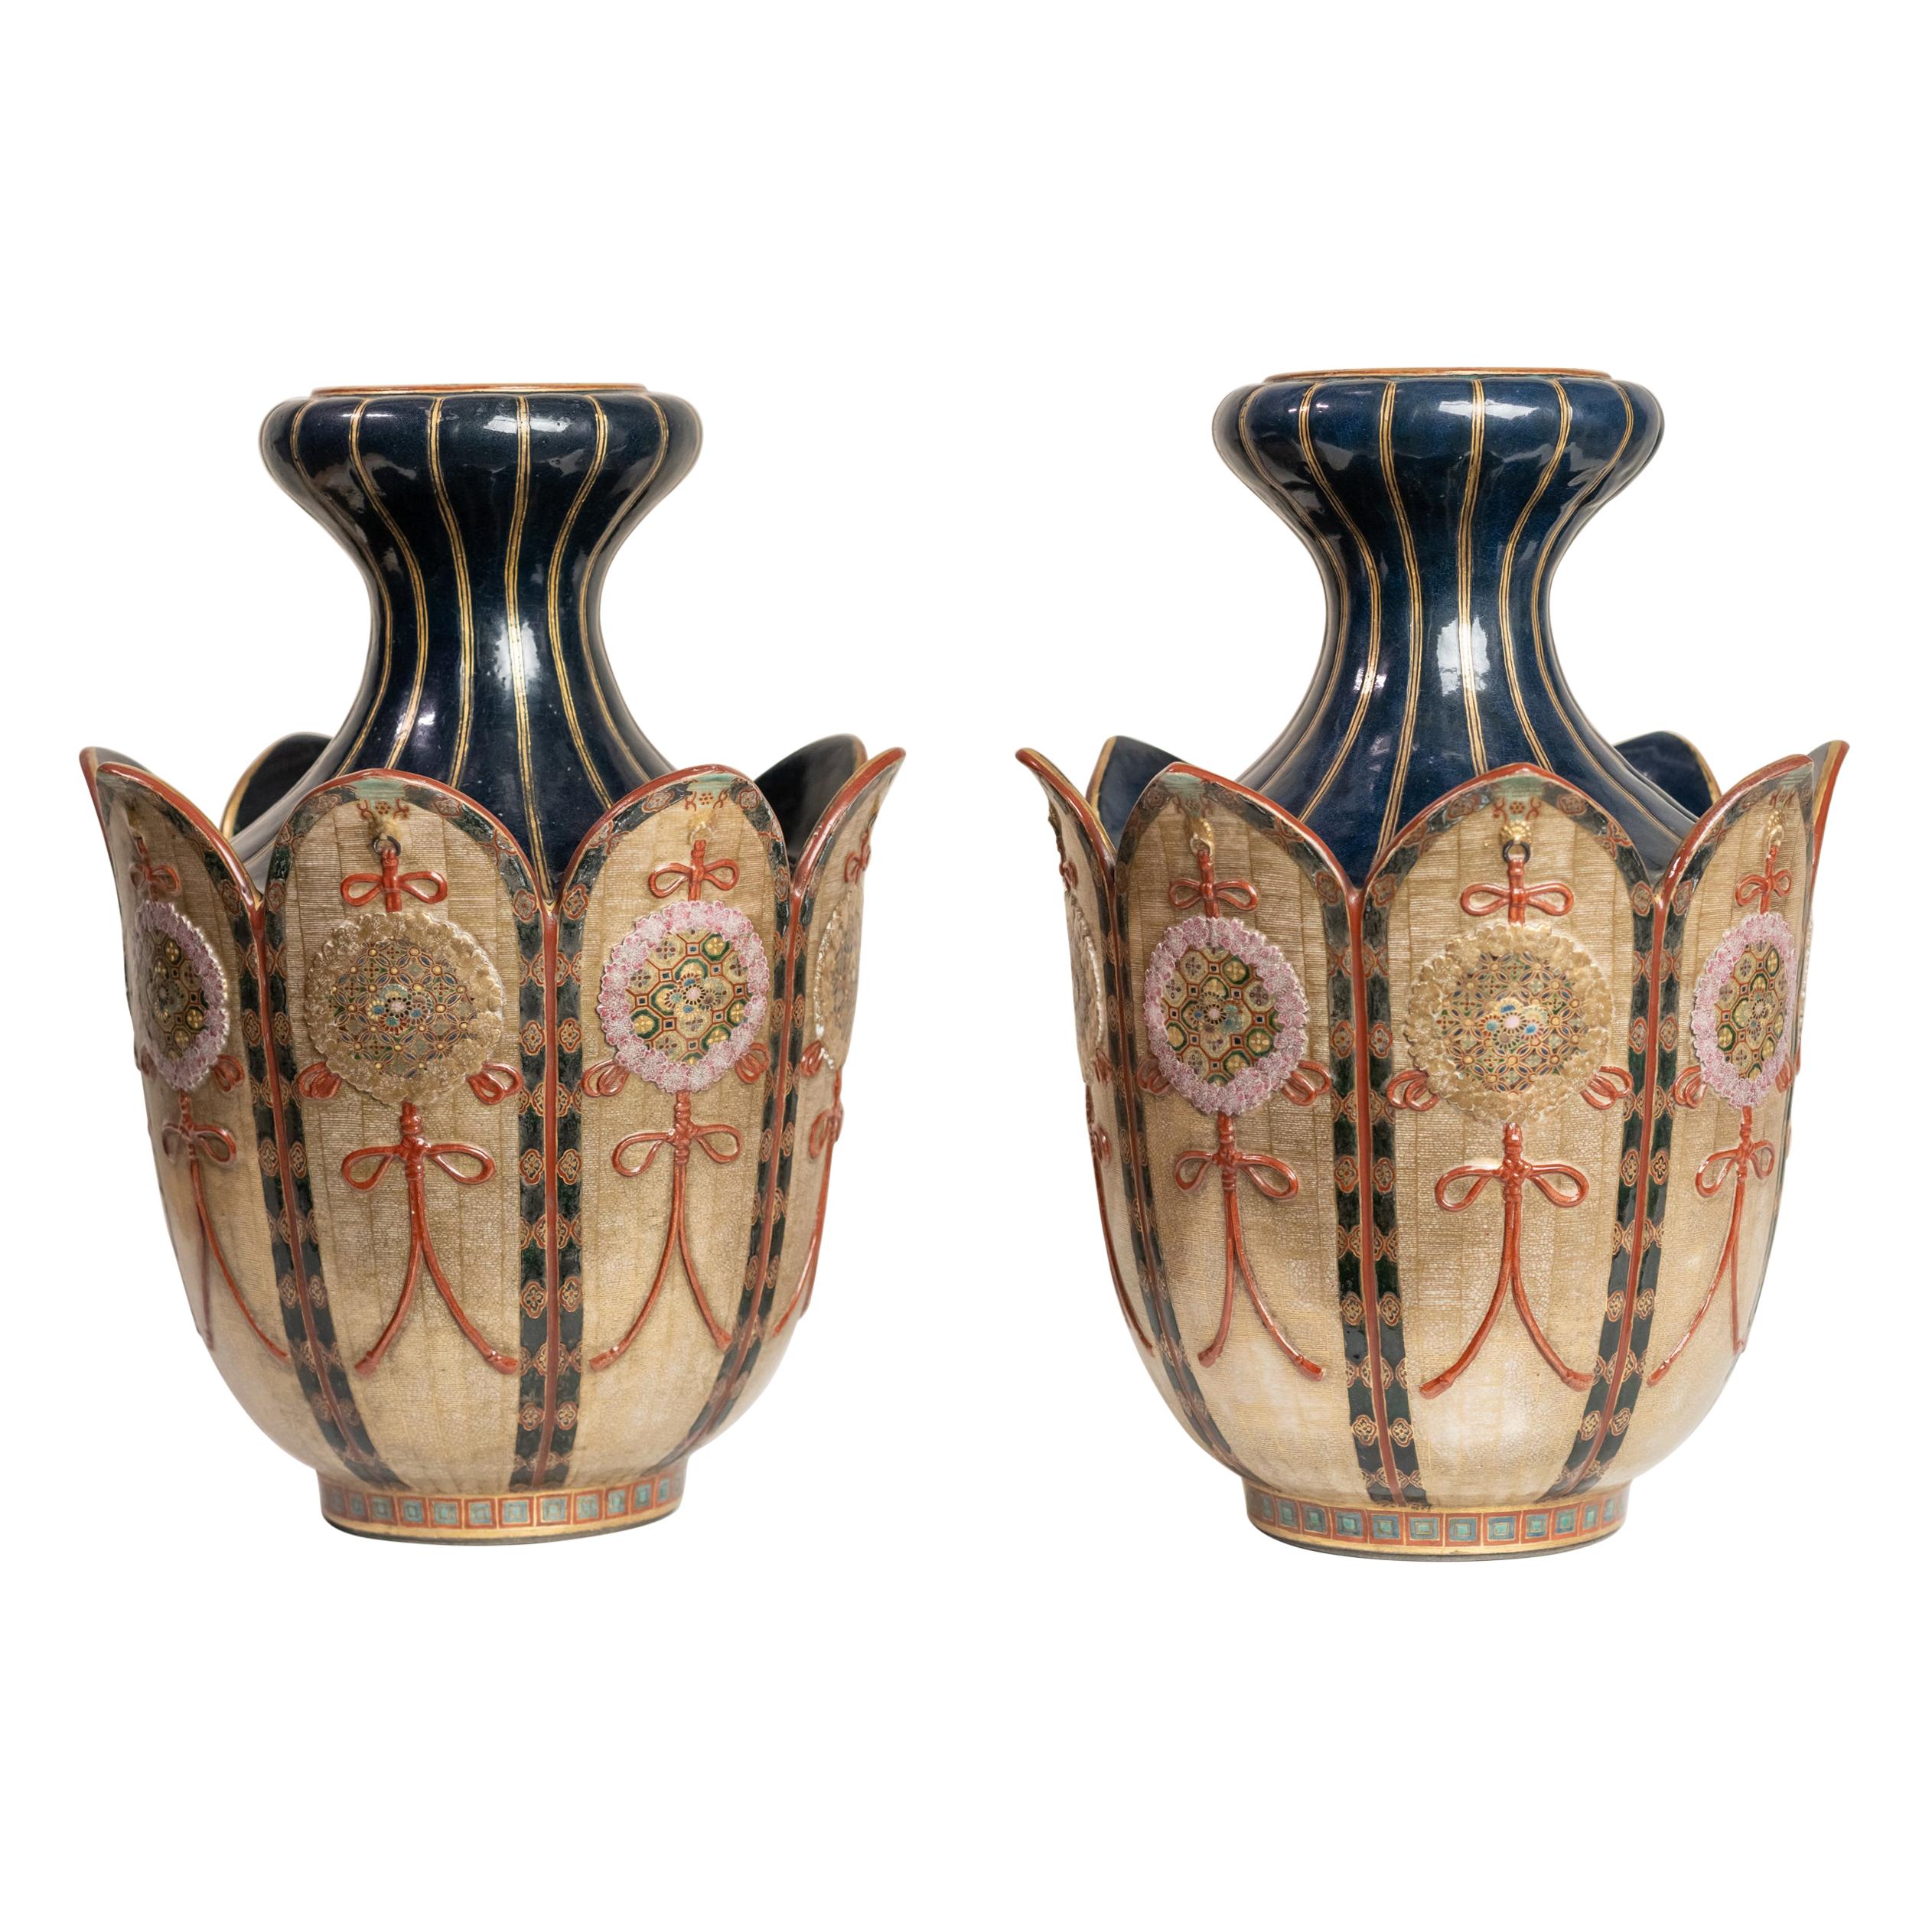 Große japanische Vase Porzellan handbemalt Signatur Satsuma Japan RK272 